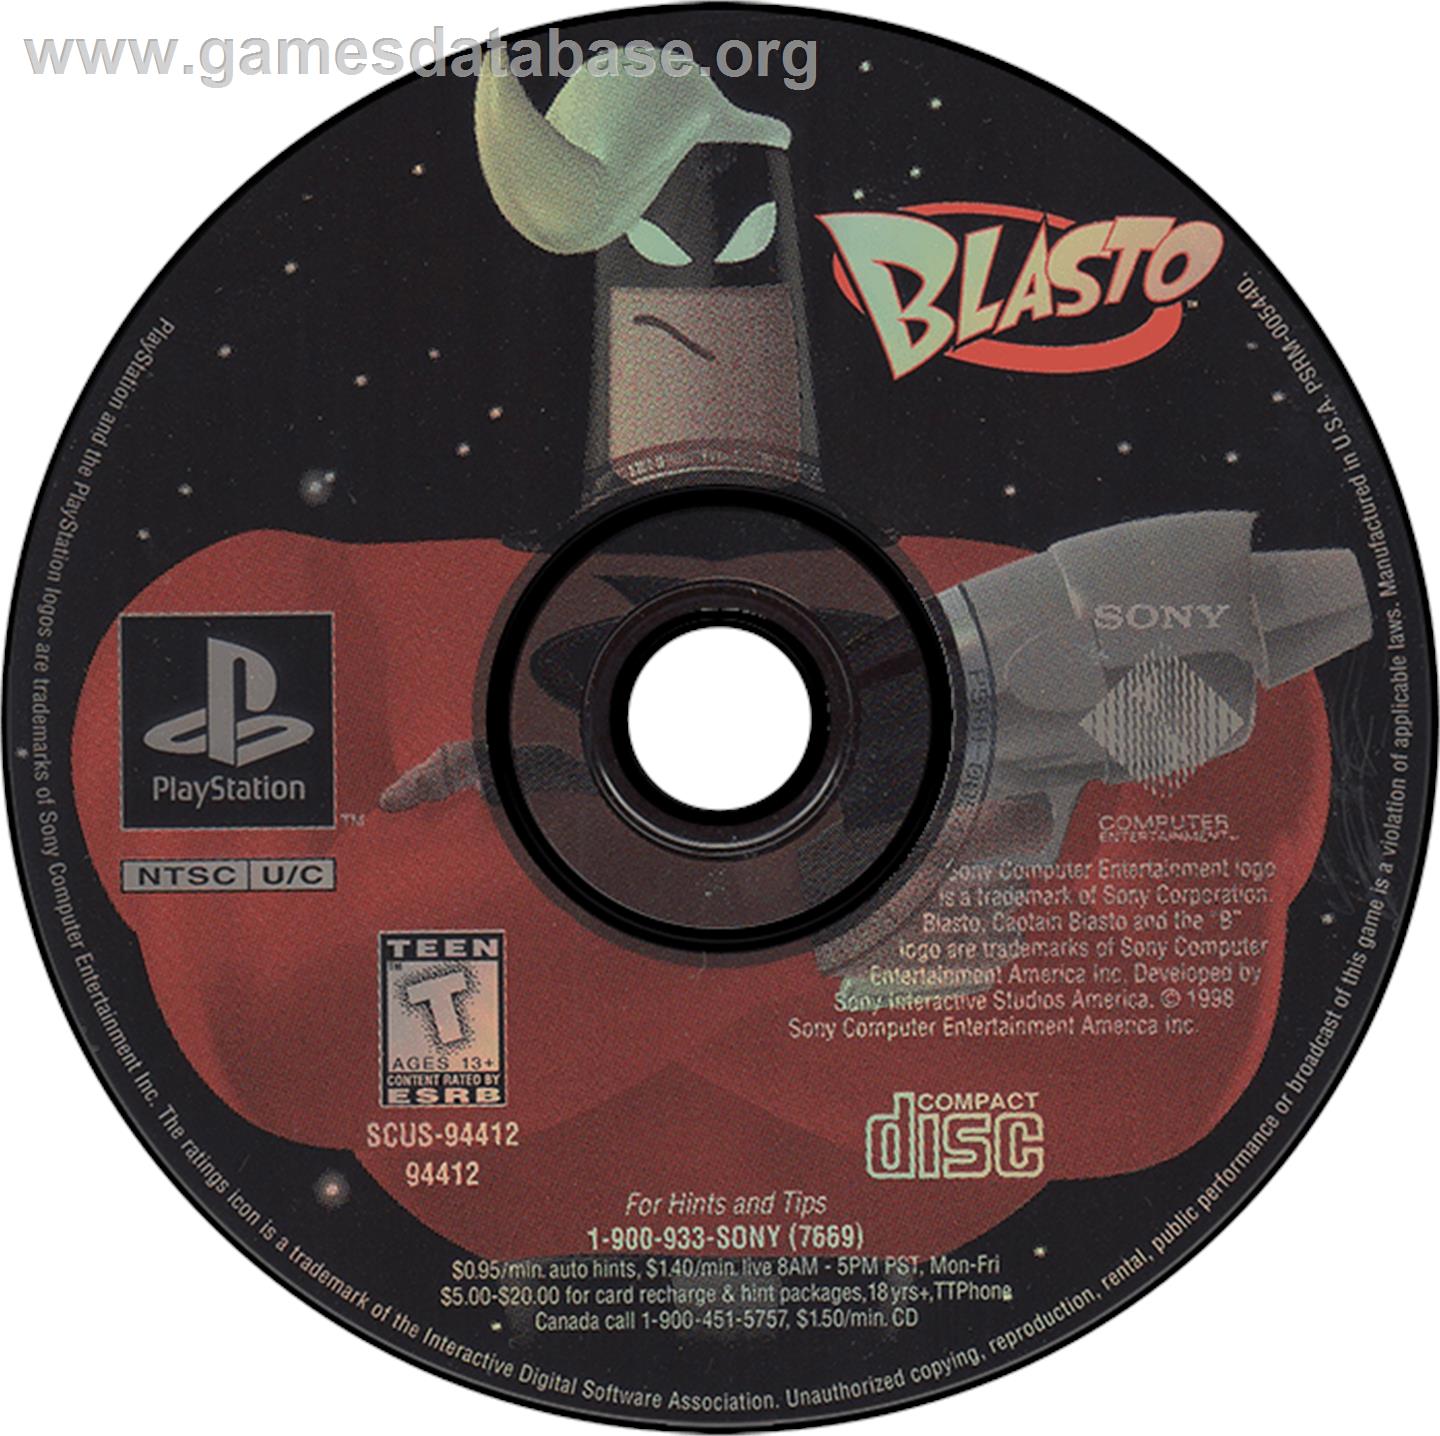 Blasto - Sony Playstation - Artwork - Disc